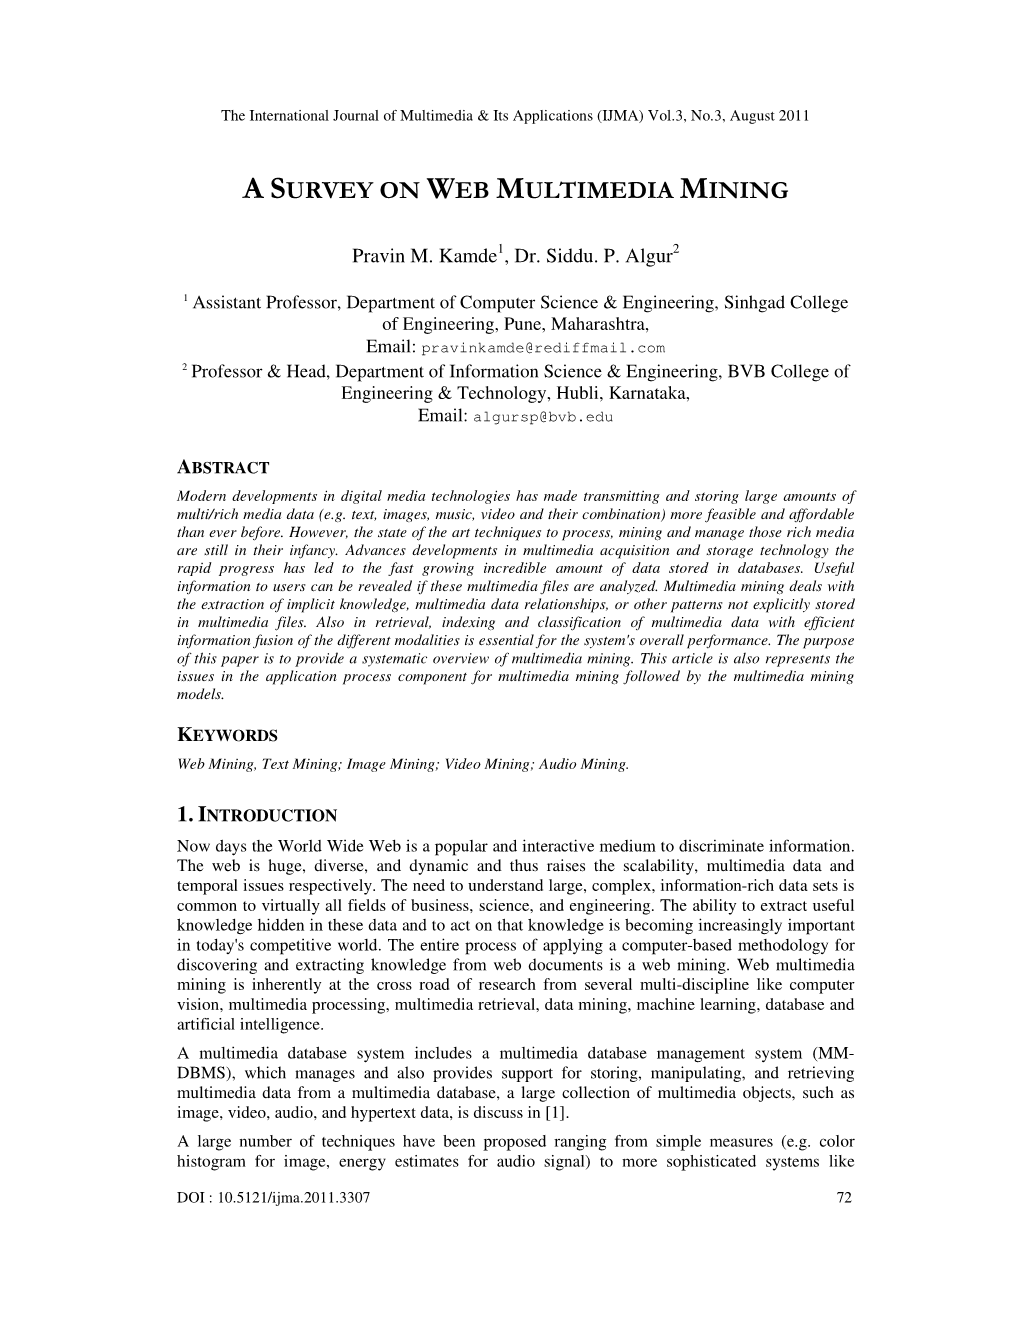 A Survey on Web Multimedia Mining